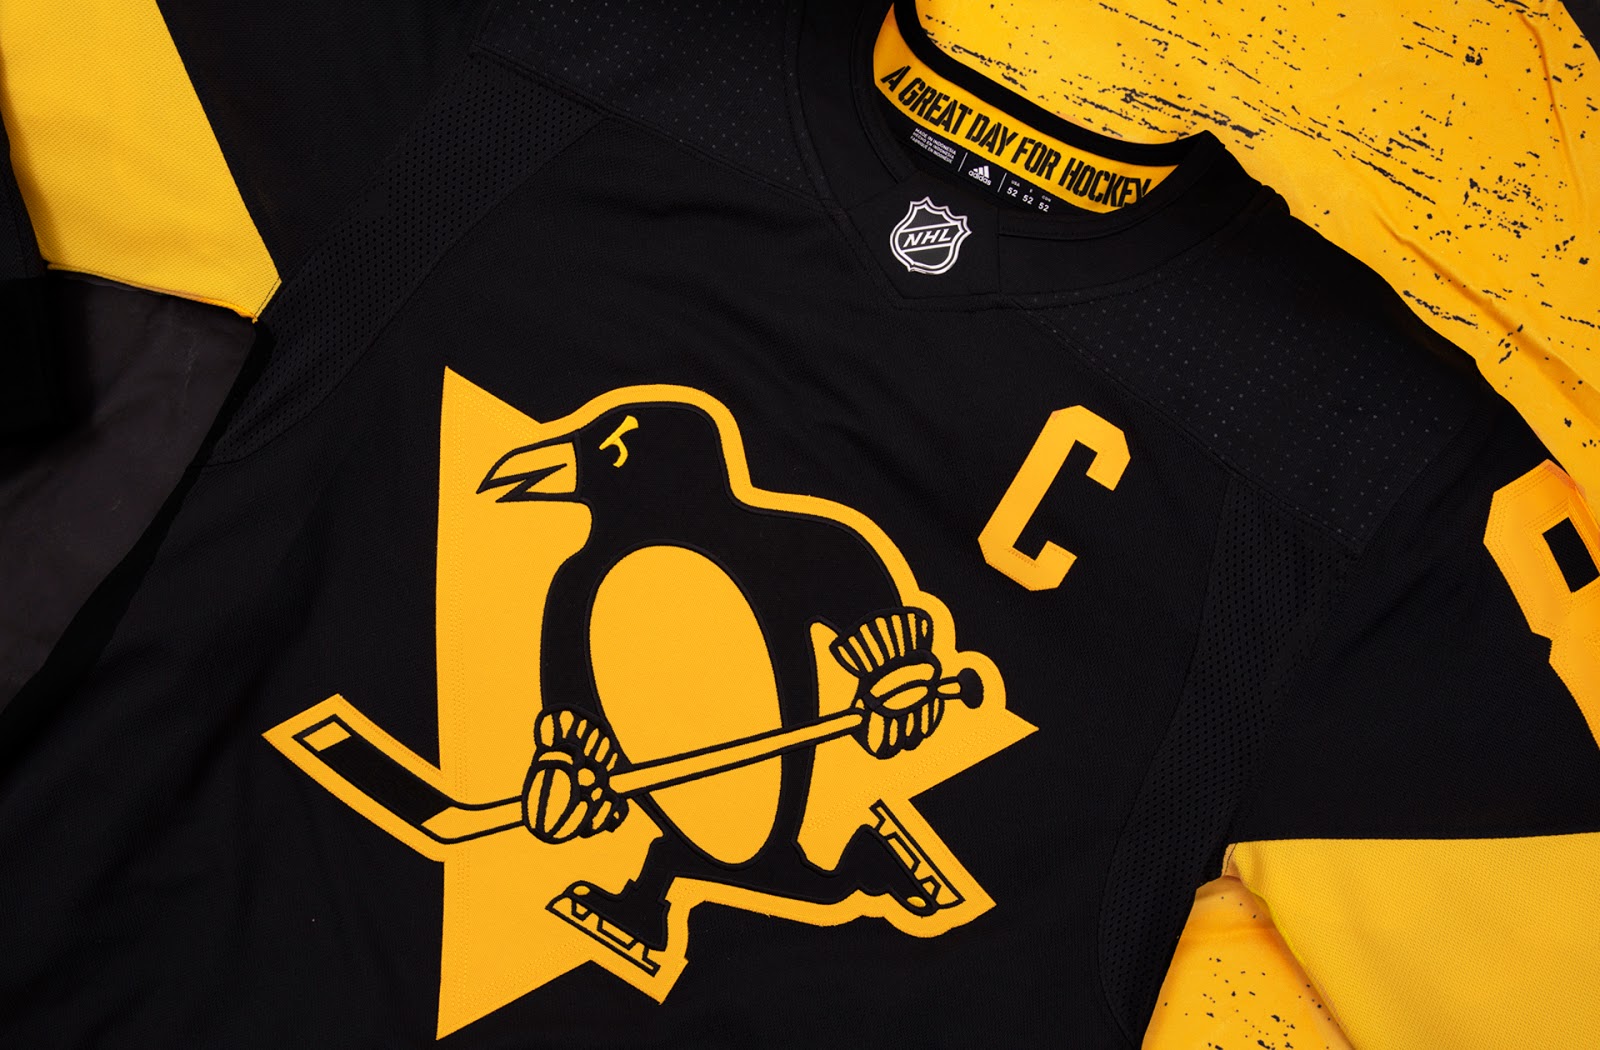 Adidas unveils Penguins' and Flyers' 2019 Stadium Series jerseys